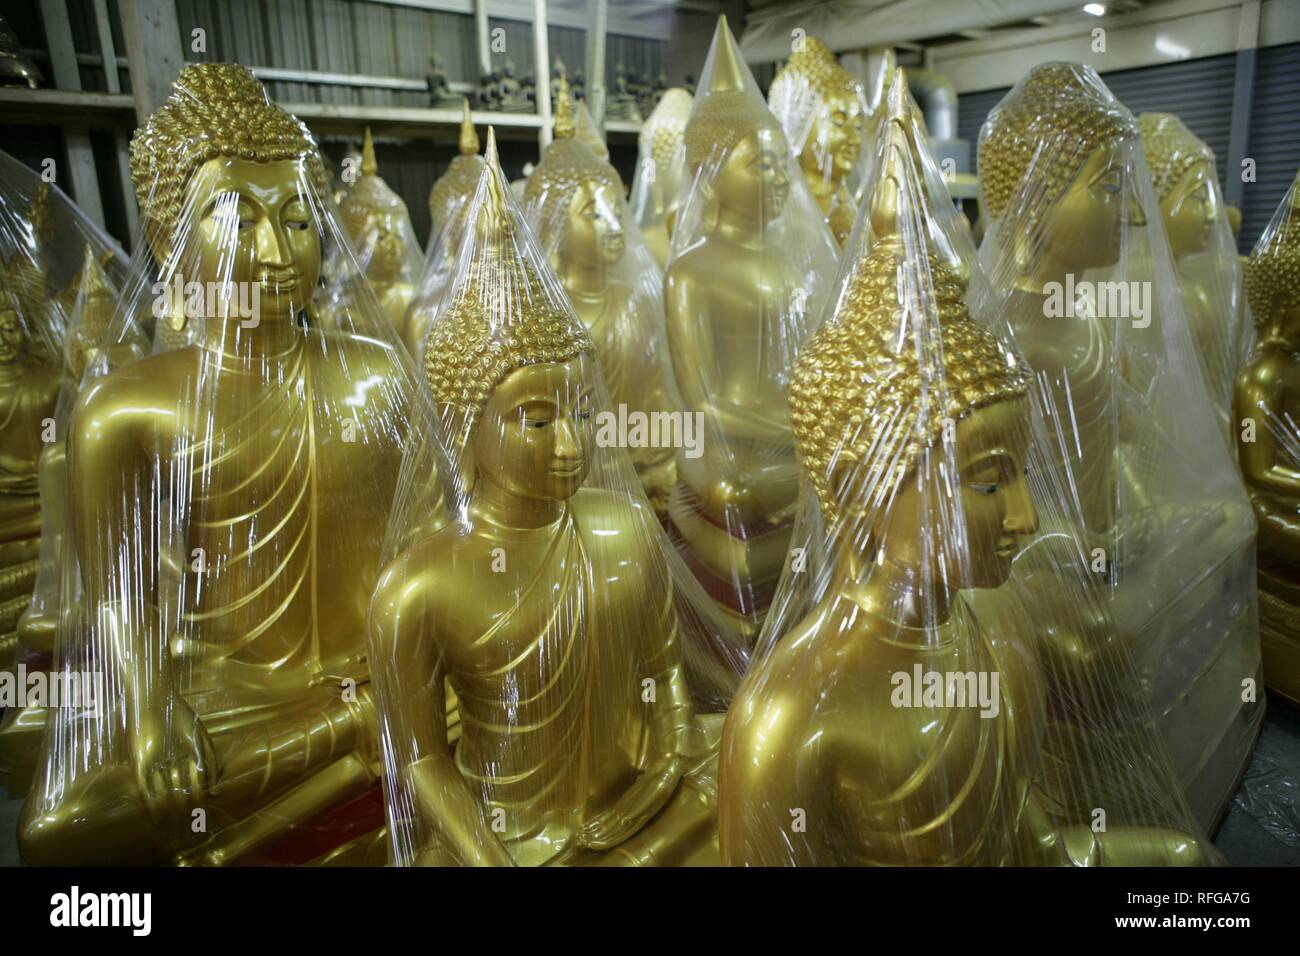 THA Thailand Bangkok Buddah Factory. Handmade Buddha statues Stock Photo